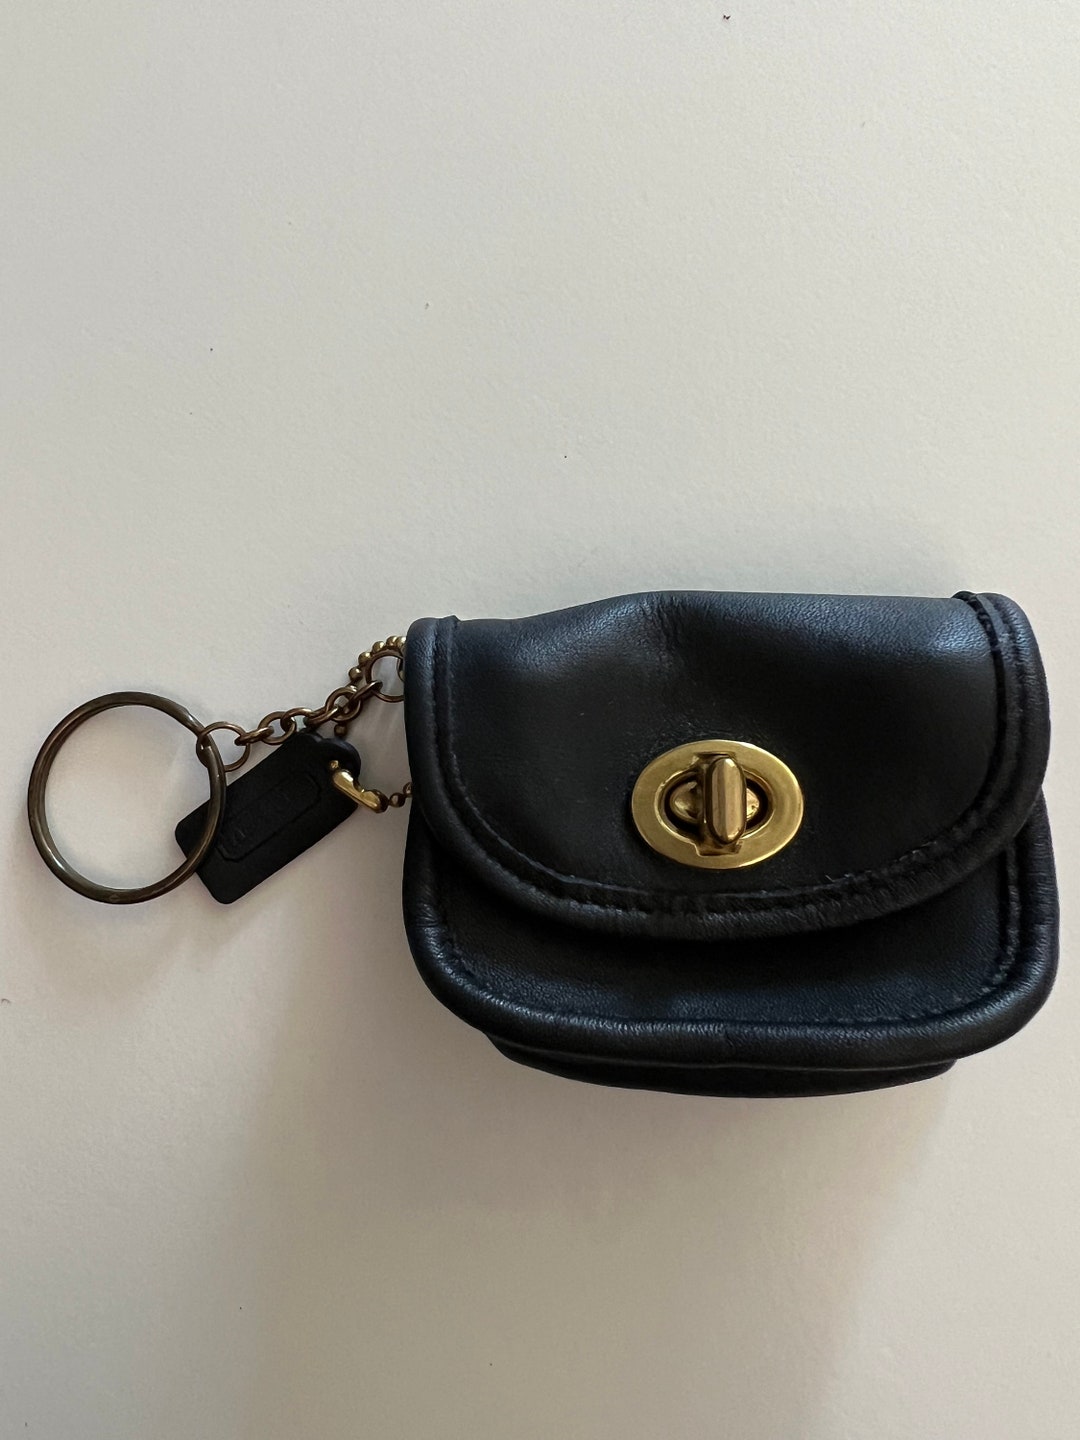 COACH Vintage City Key Fob Leather Bag Charm Keychain Fob RARE NWOT